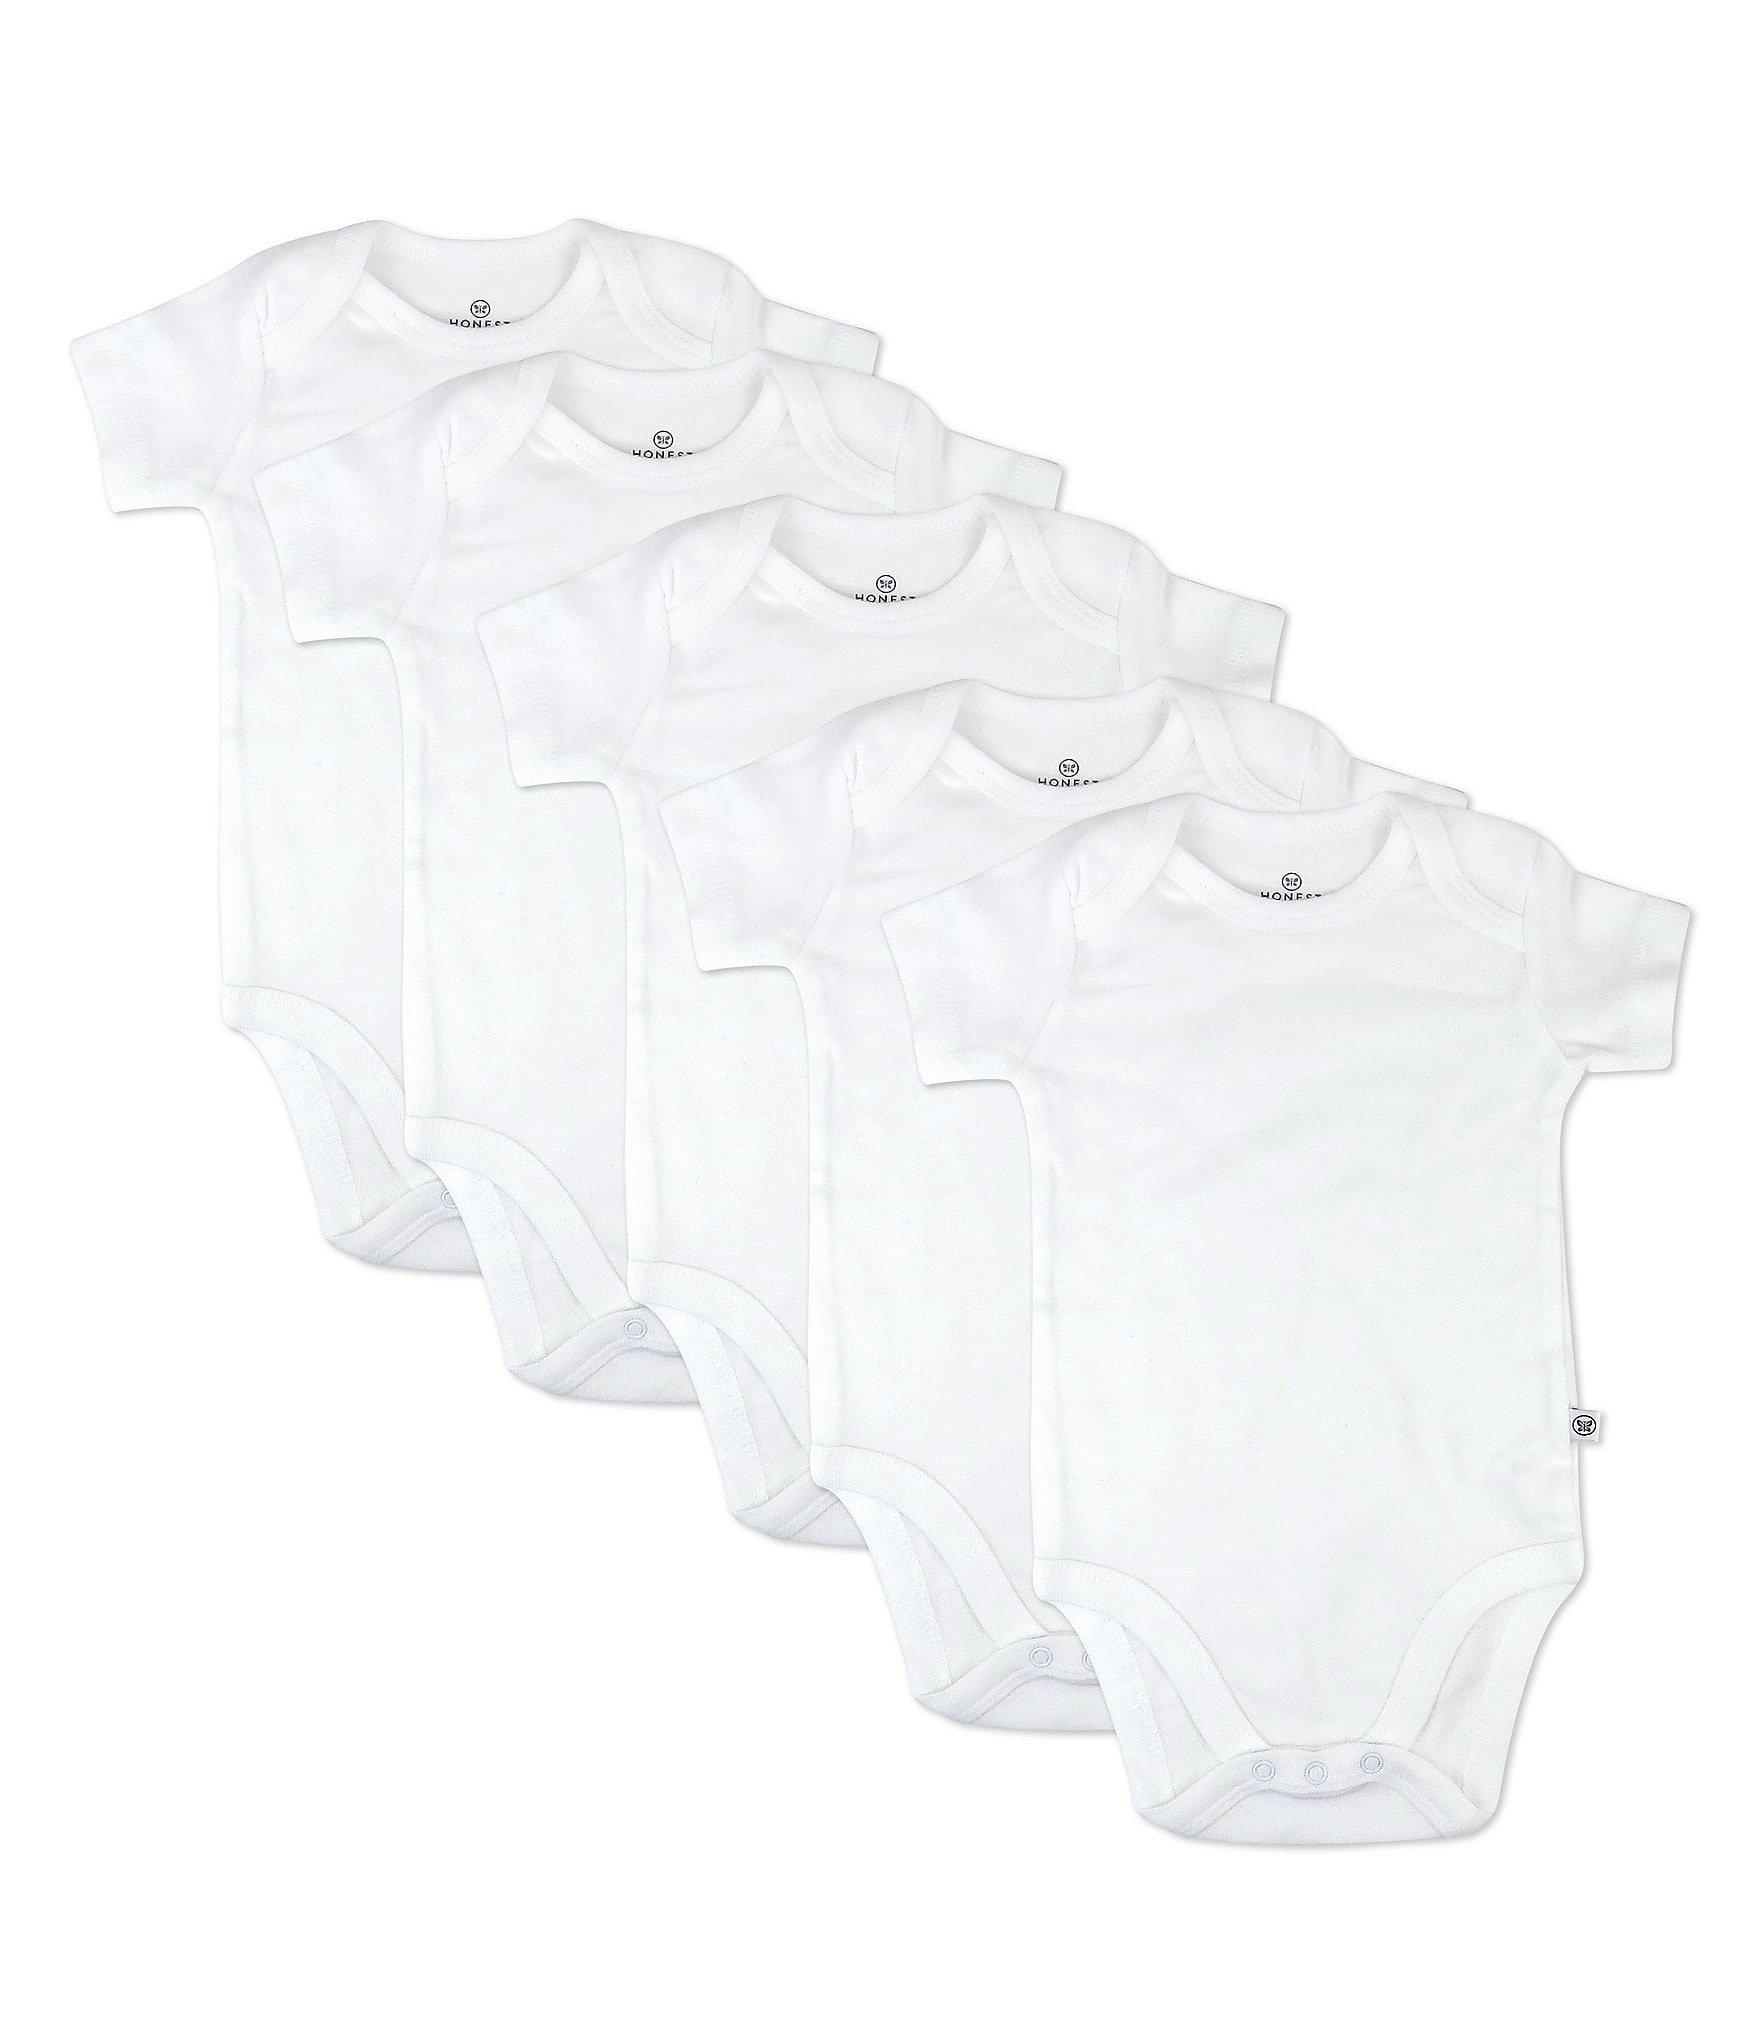 Honest Baby 5pk Organic Cotton Short Sleeve Bodysuit - Gray 12m